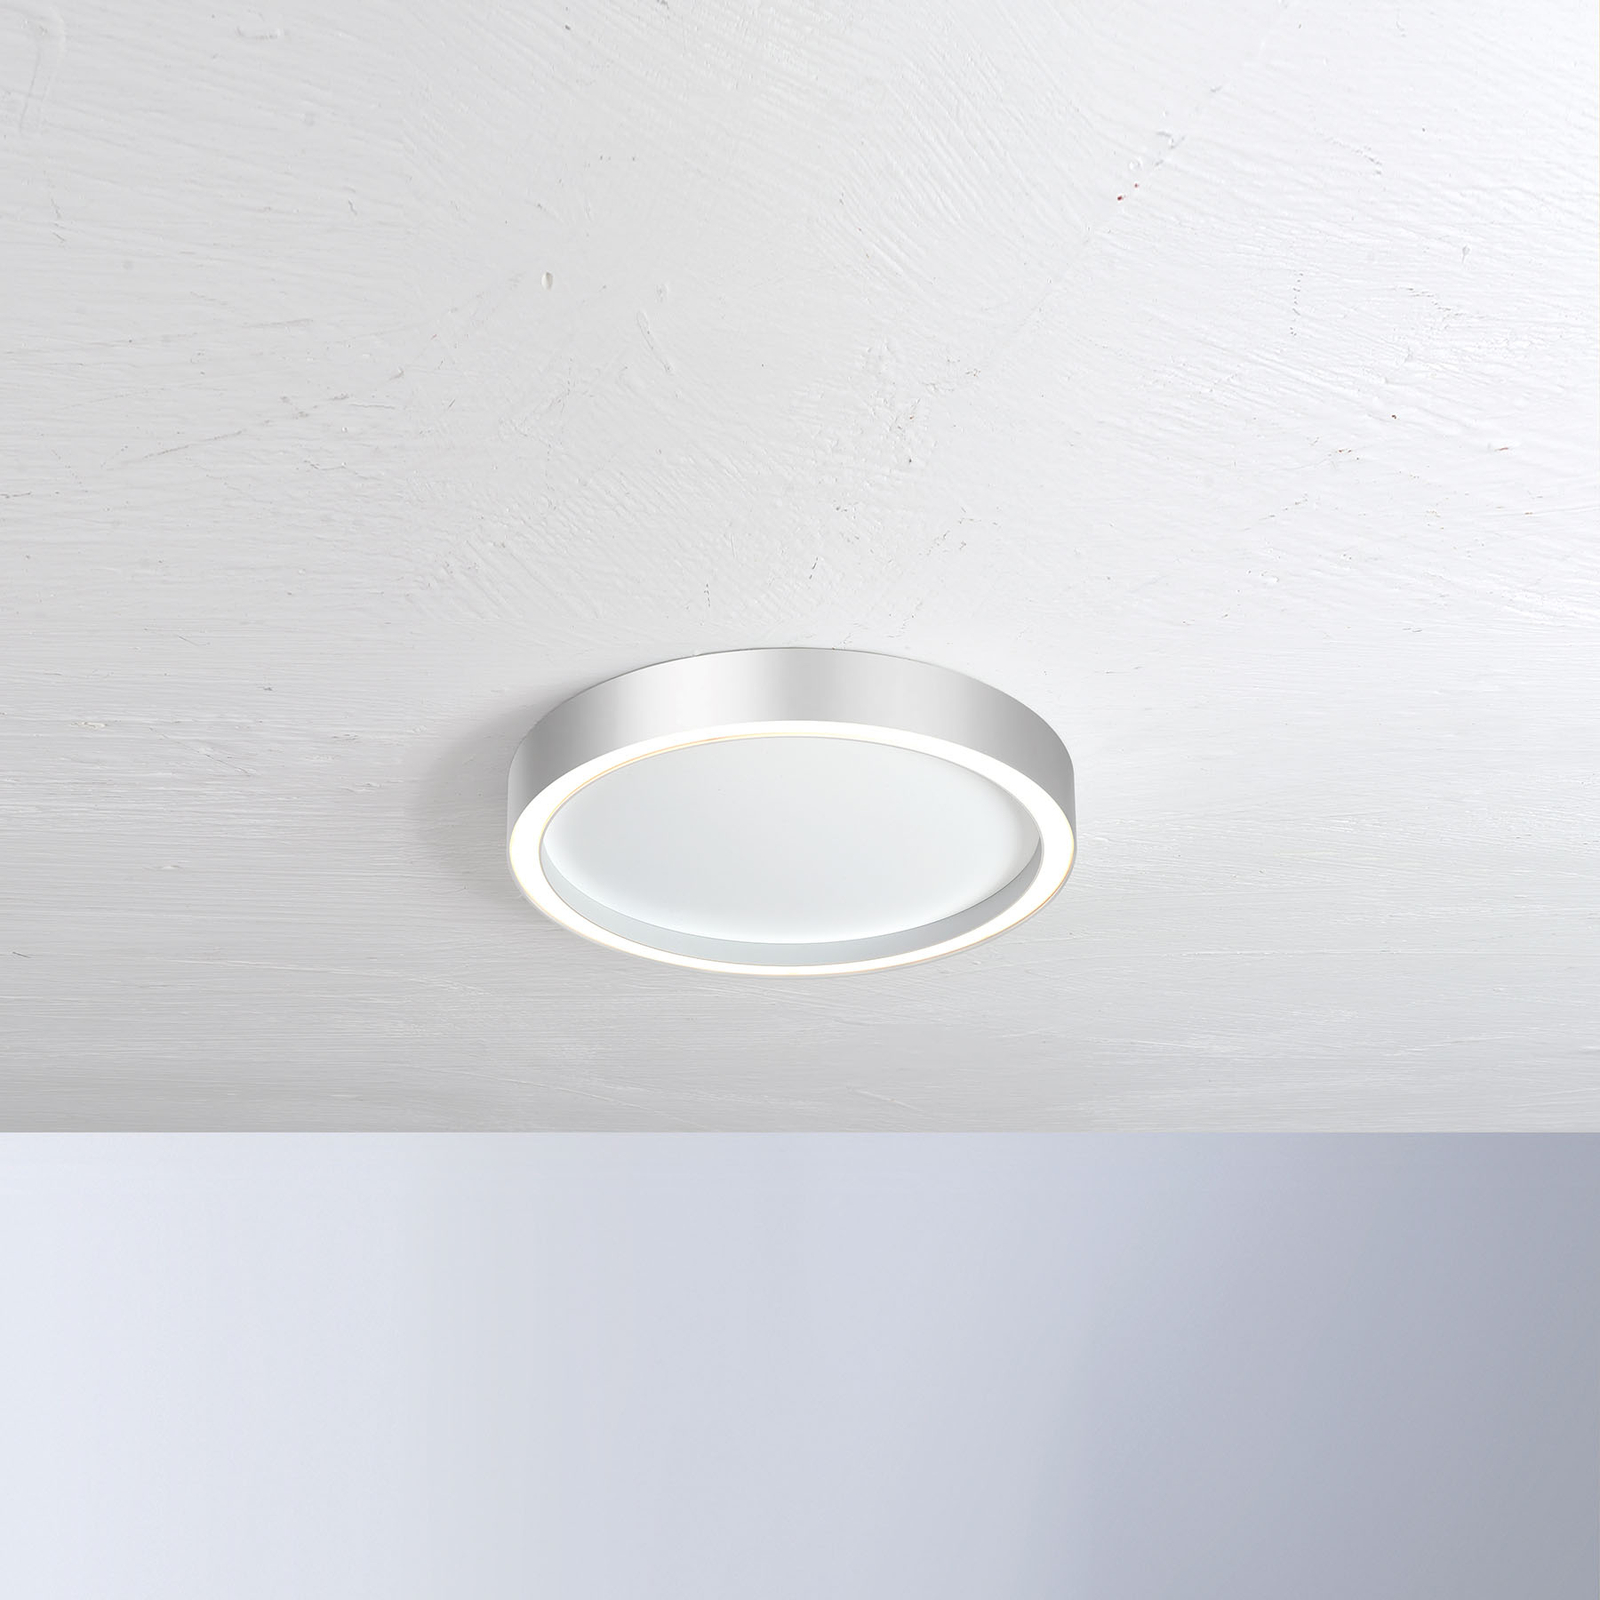 Bopp Aura LED stropné svietidlo Ø 30 cm biela/hliník